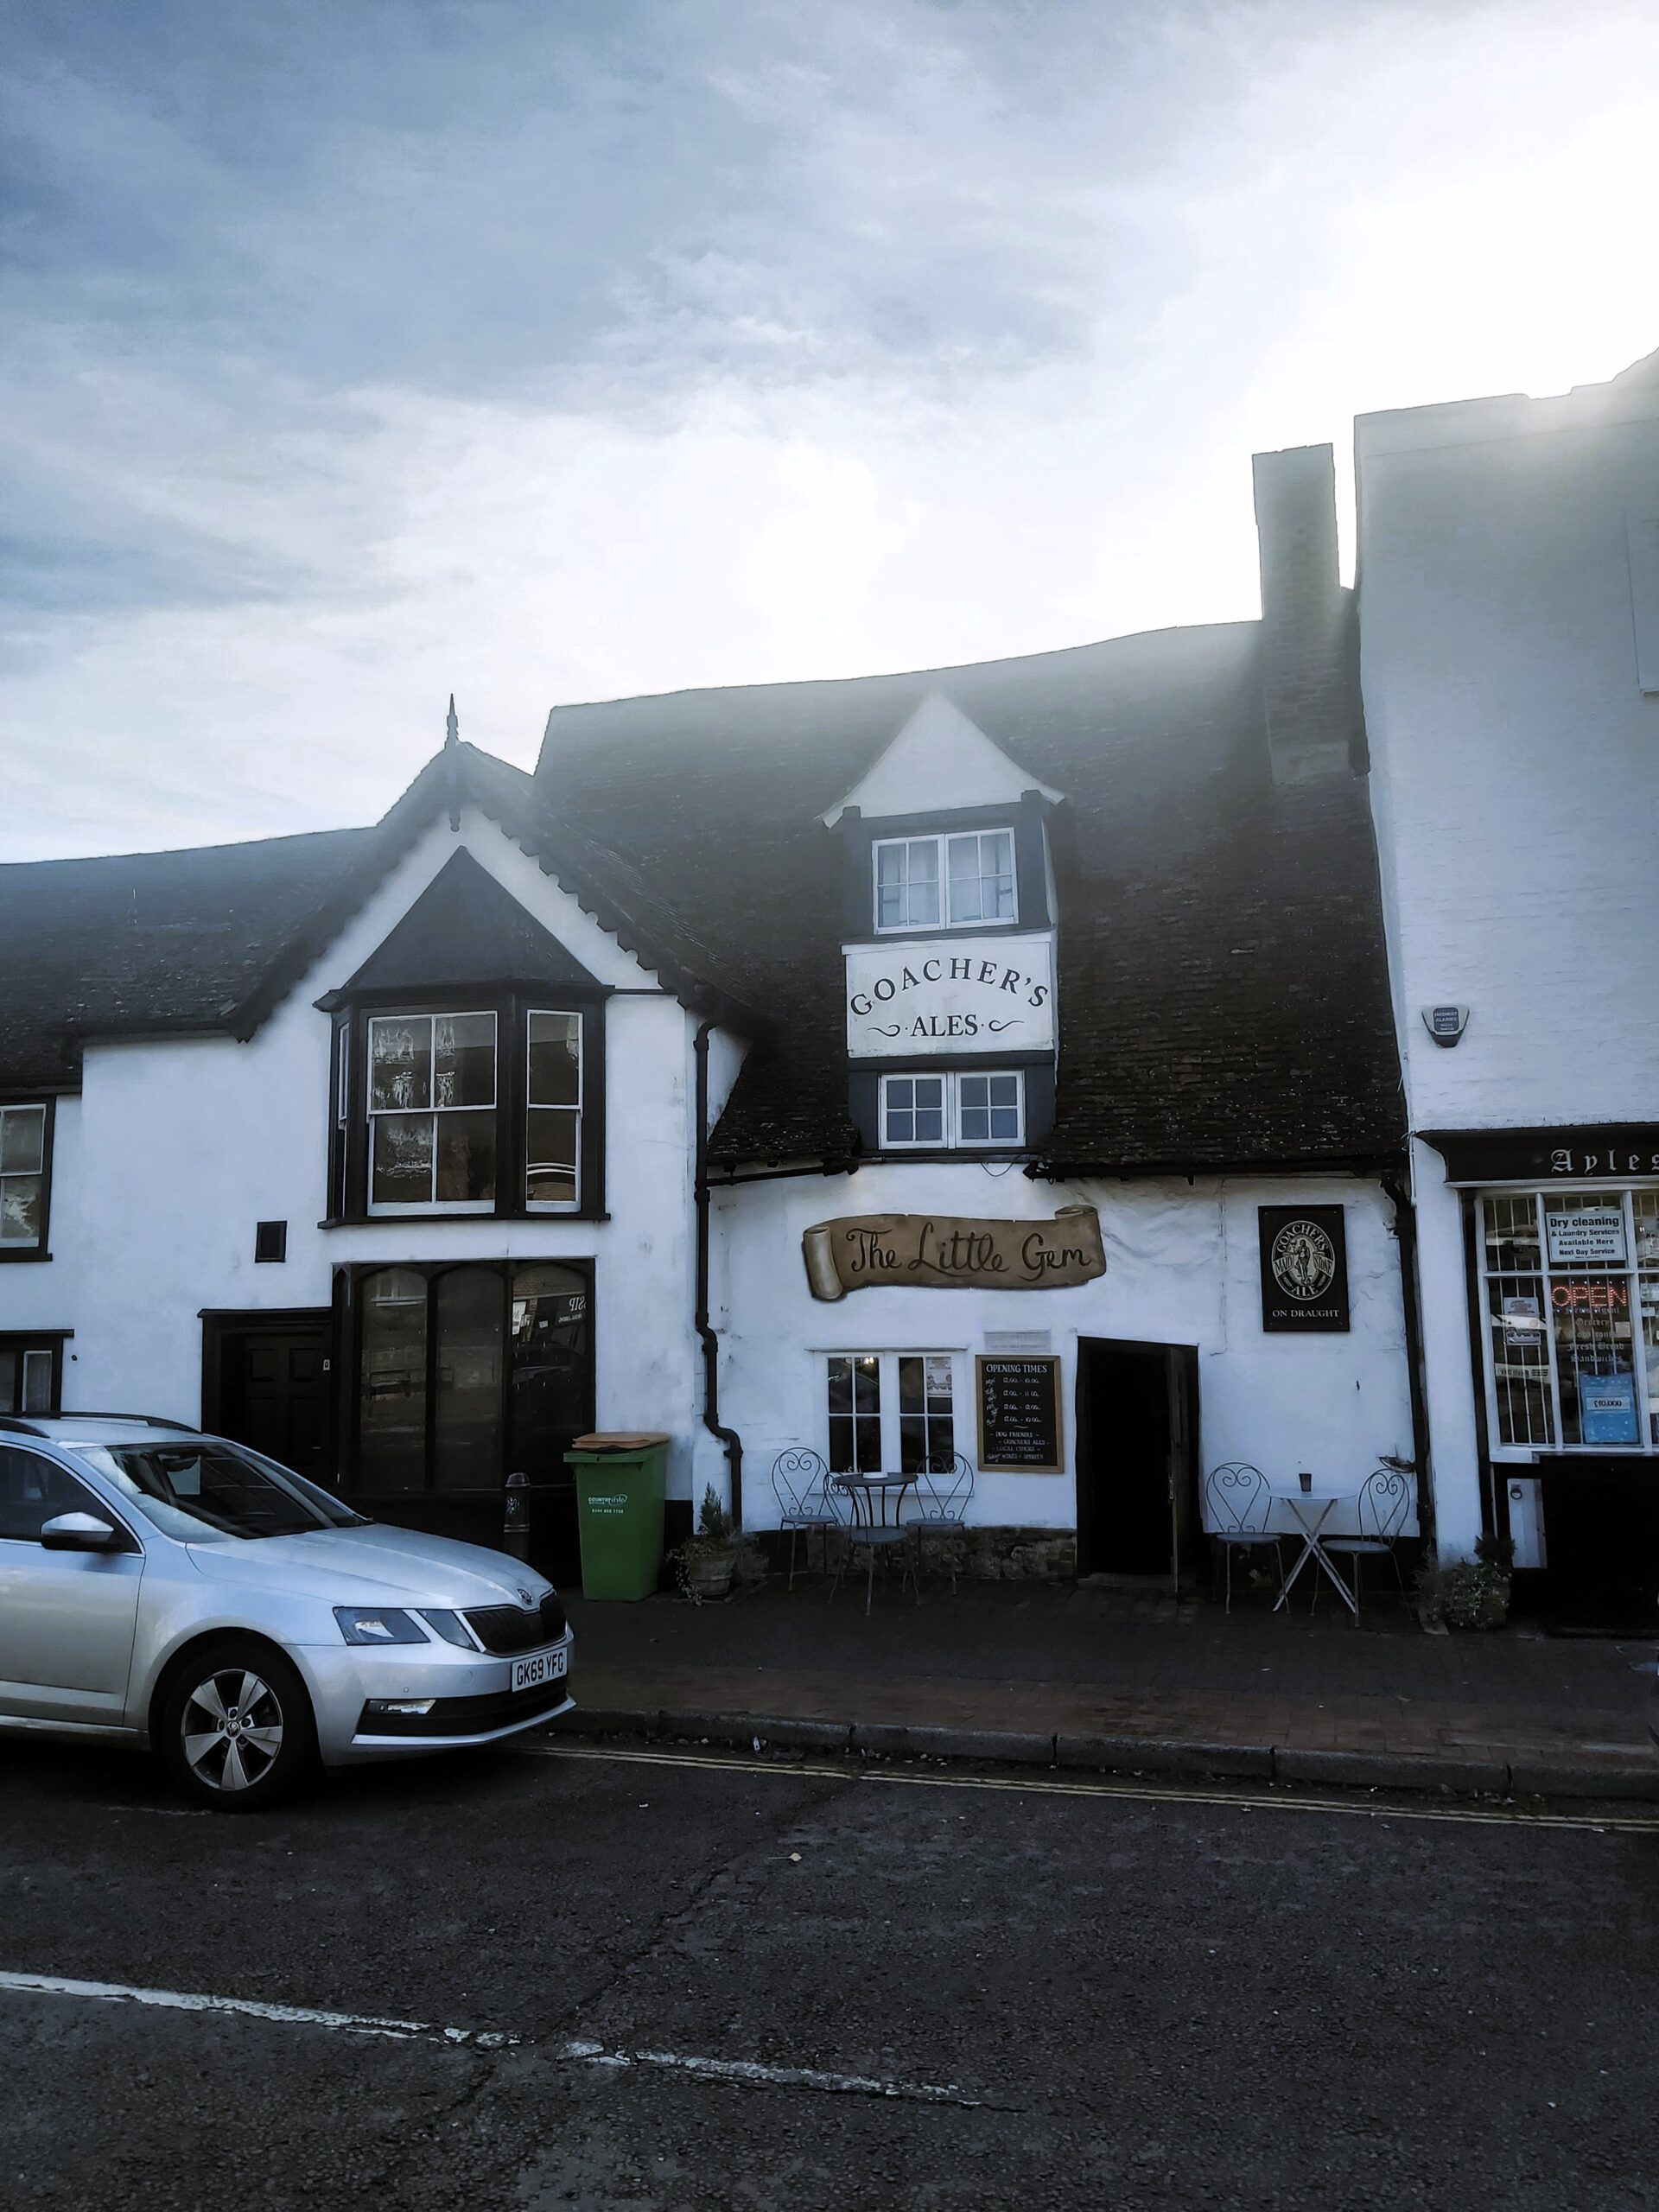 The Little Gem, an ancient pub at Aylesford, Kent, England.